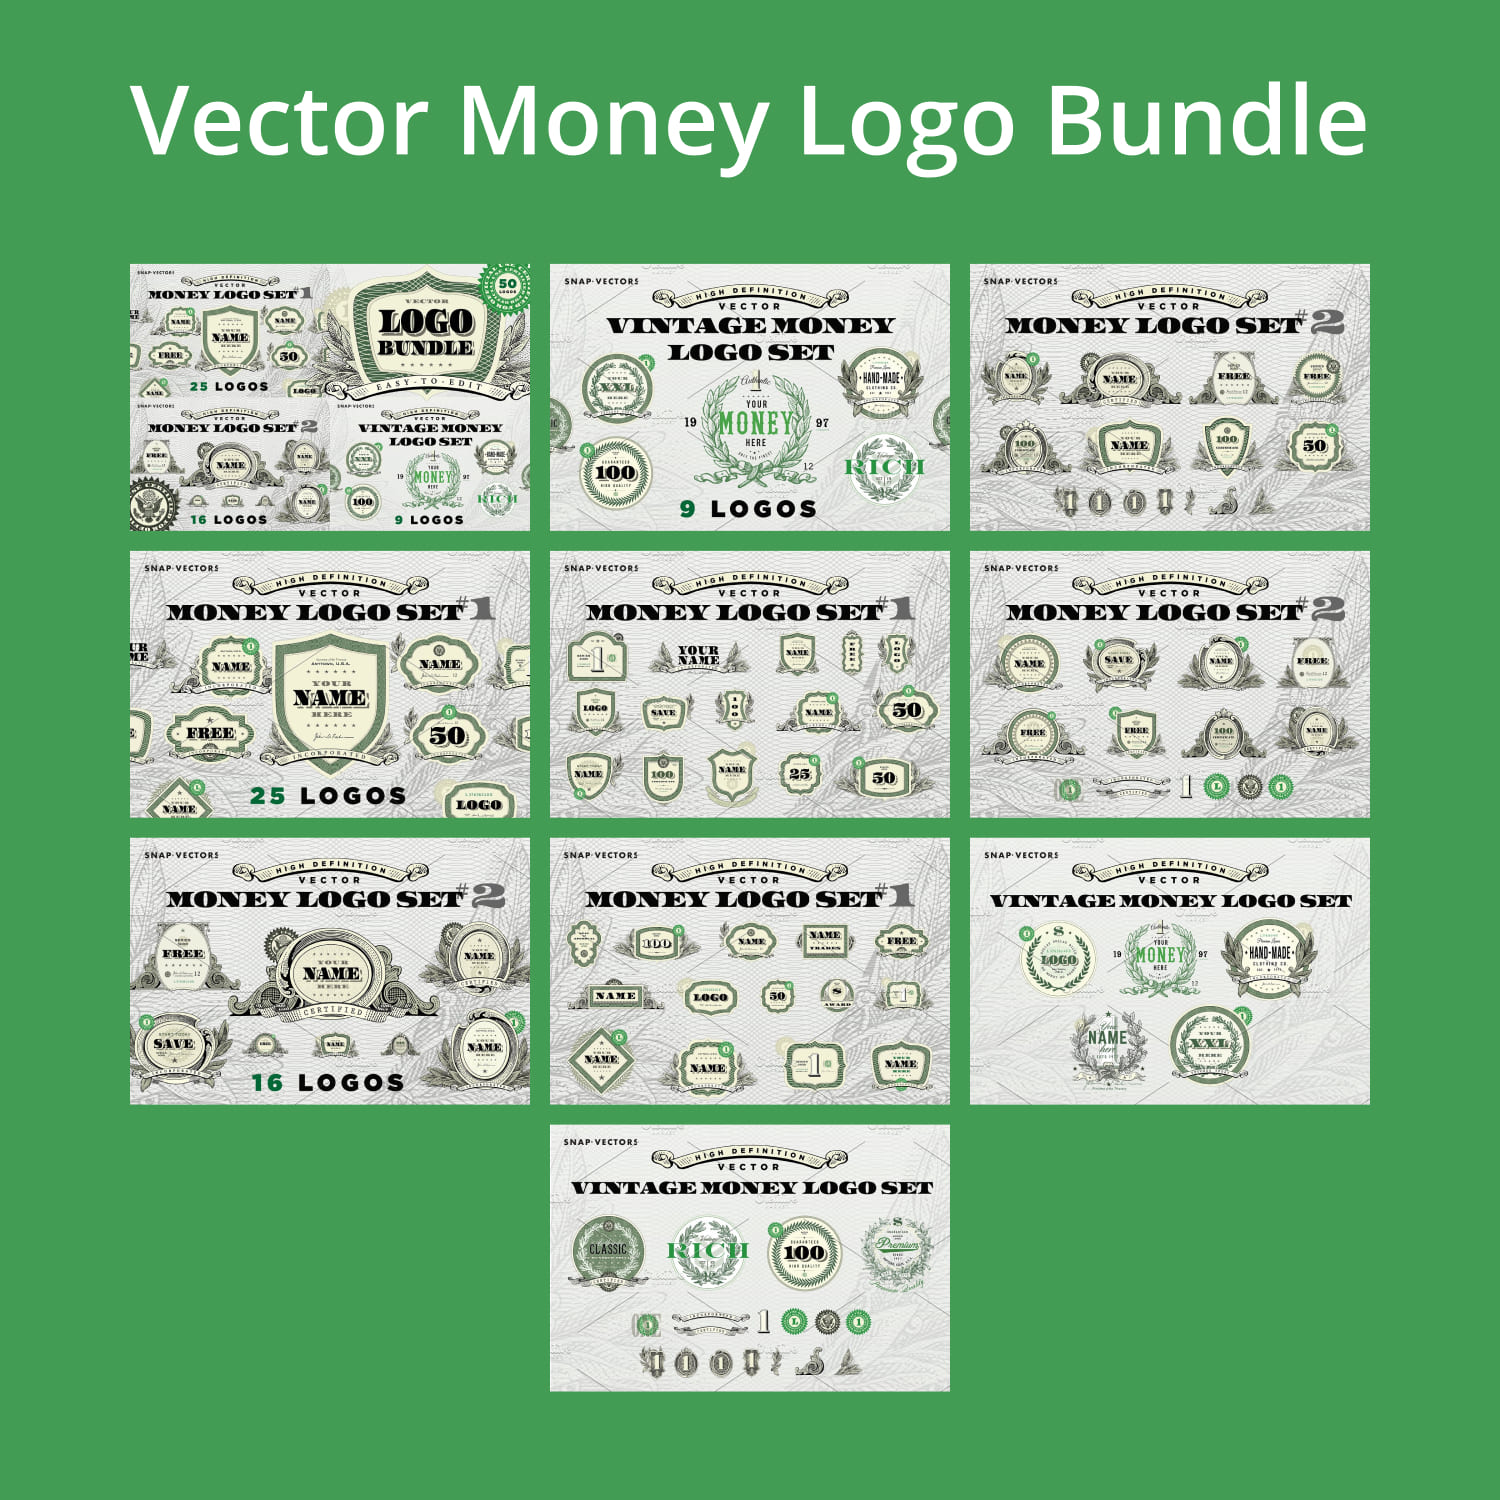 Vector Money Logo Bundle cover.